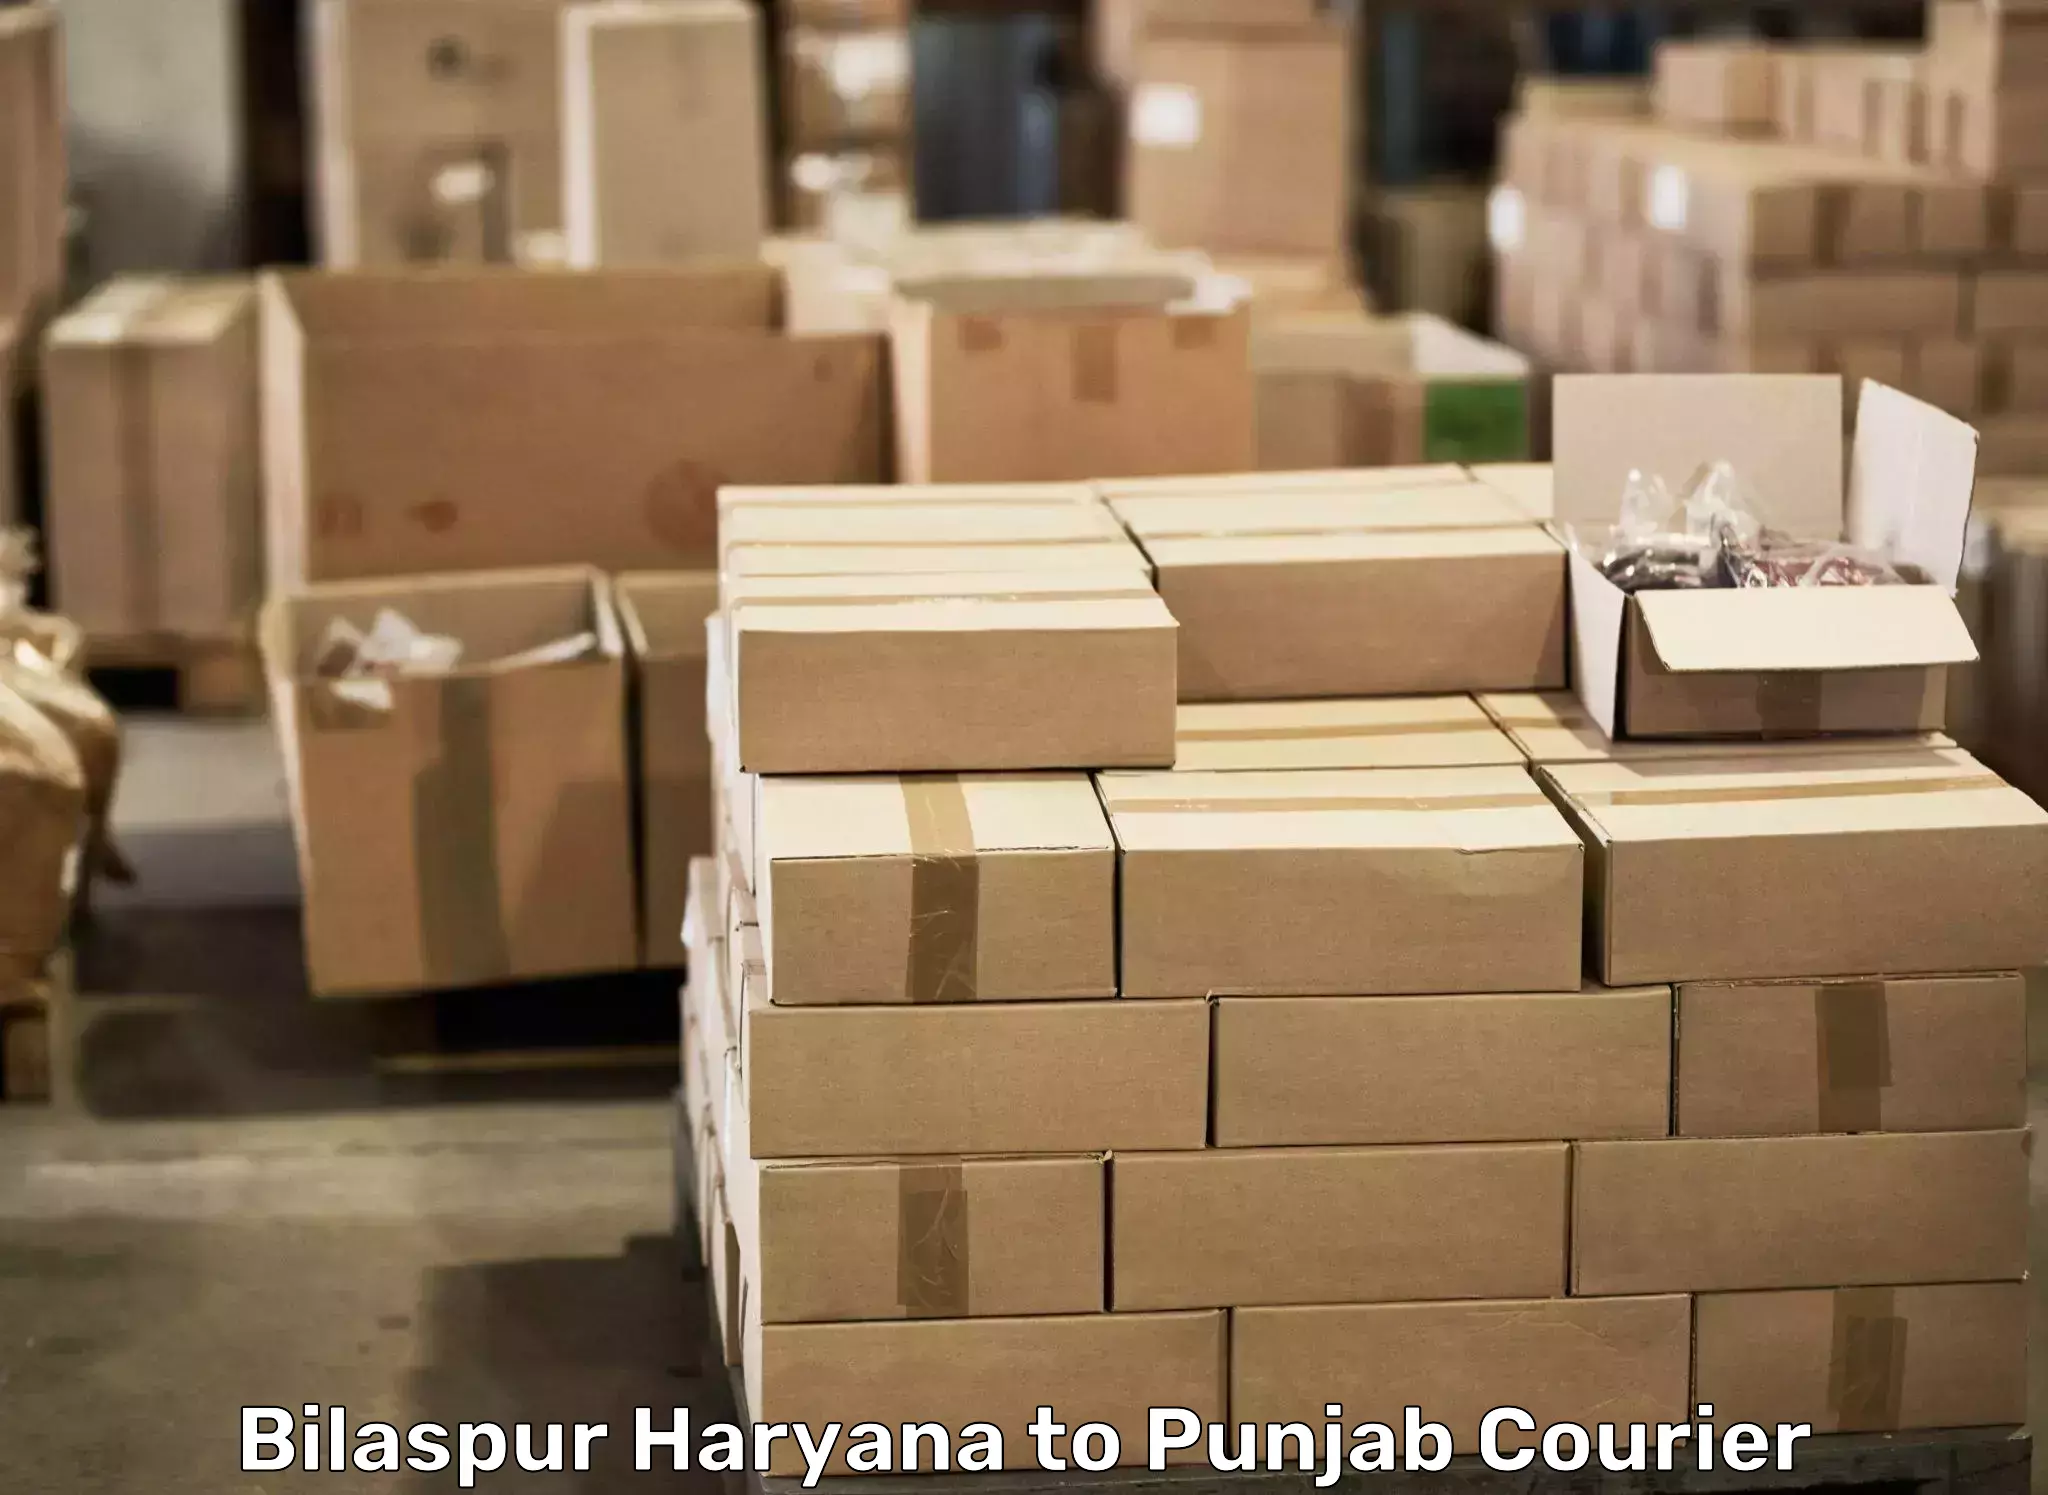 Household goods transport service Bilaspur Haryana to Amritsar